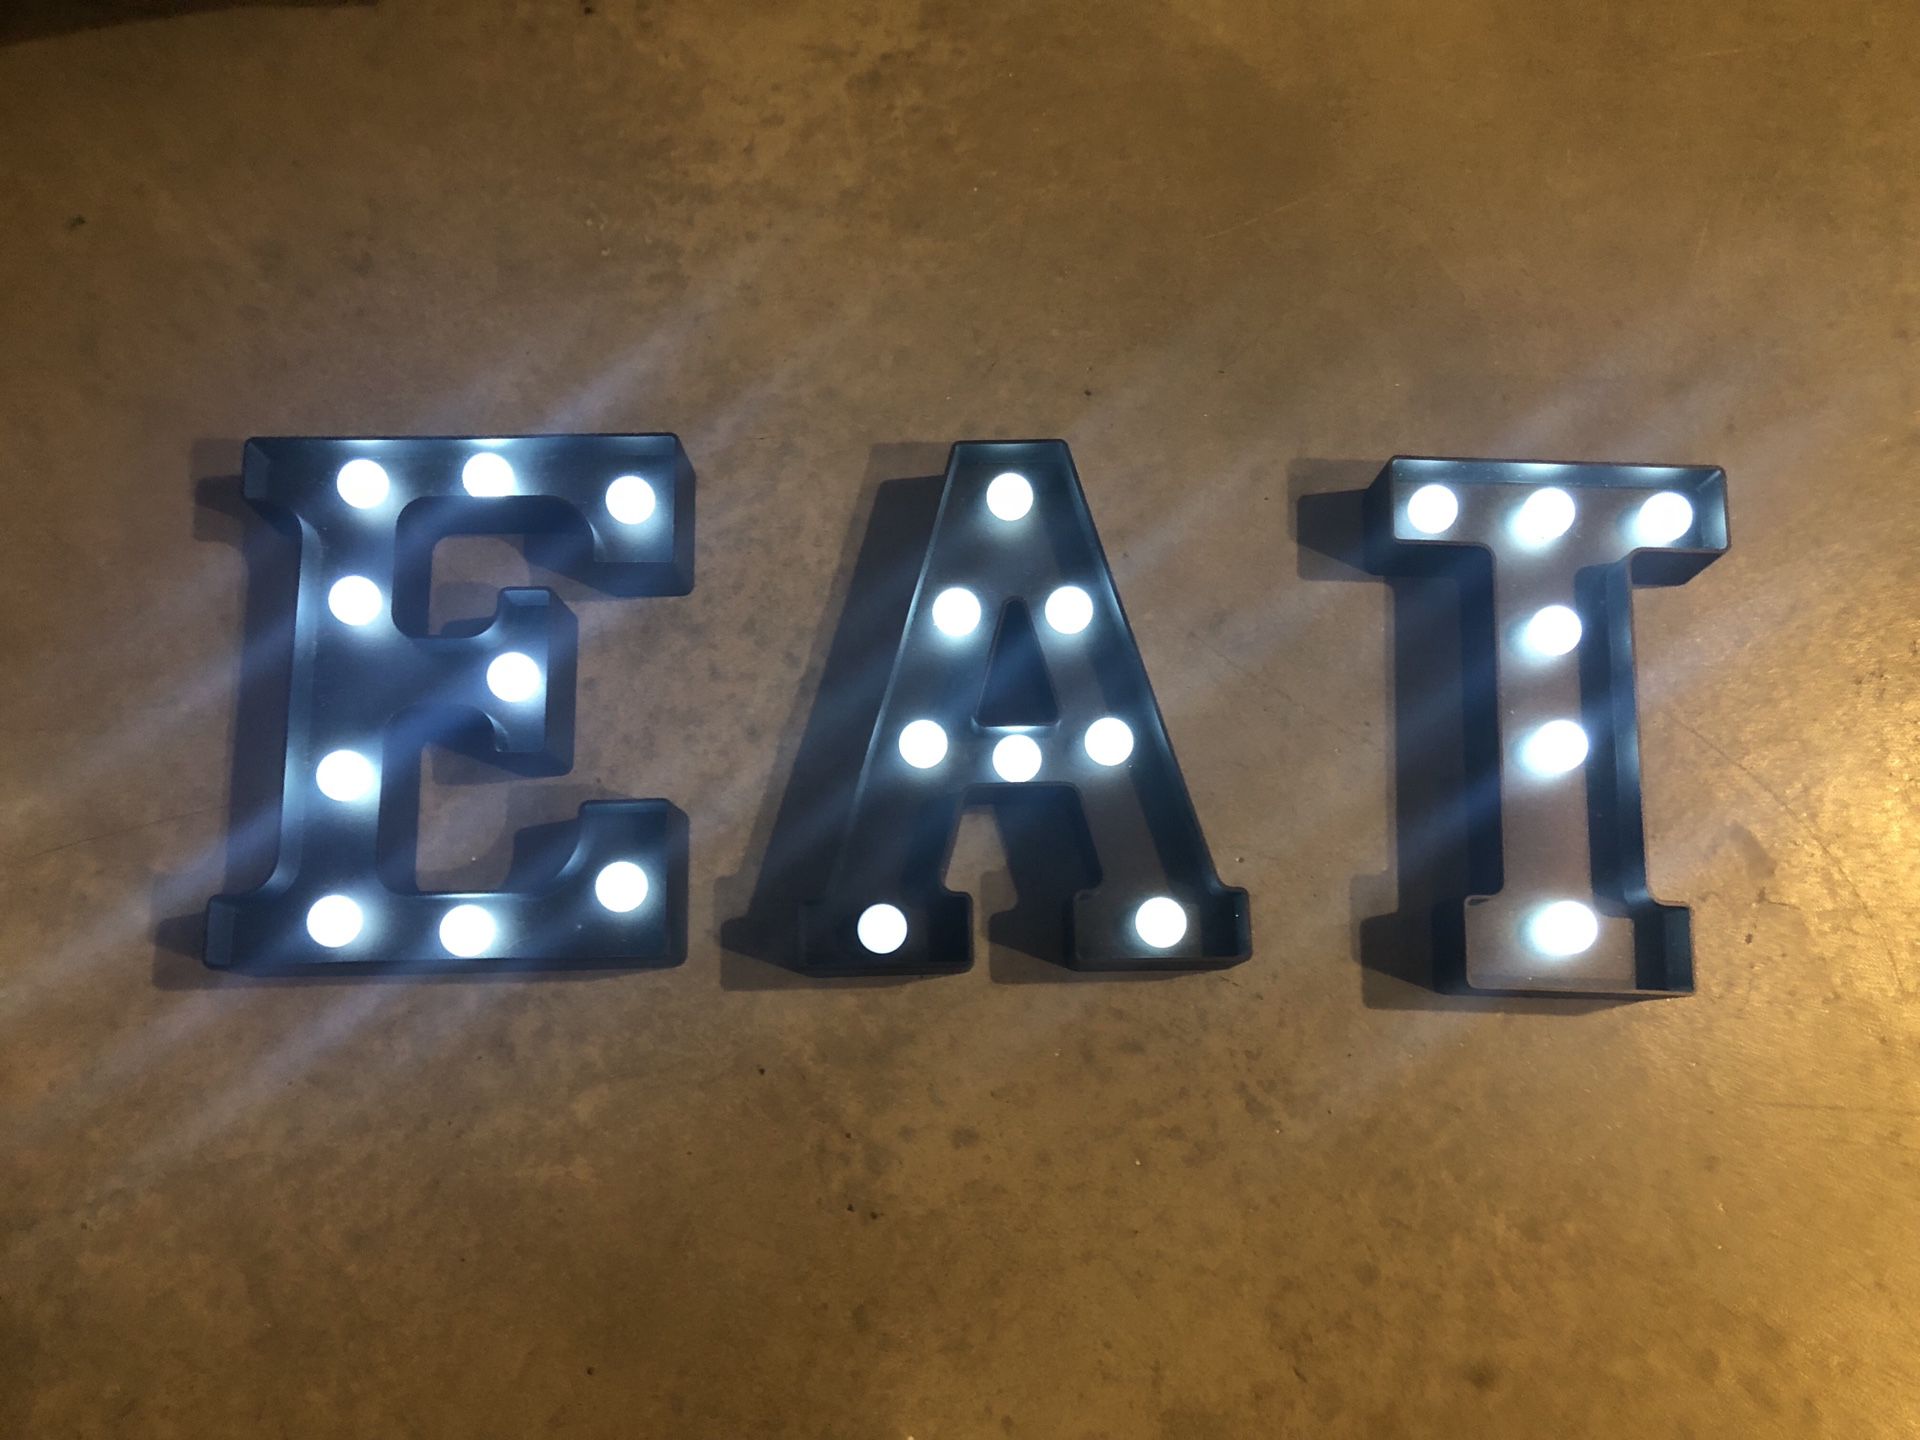 Light up kitchen sign/ home decor- EAT